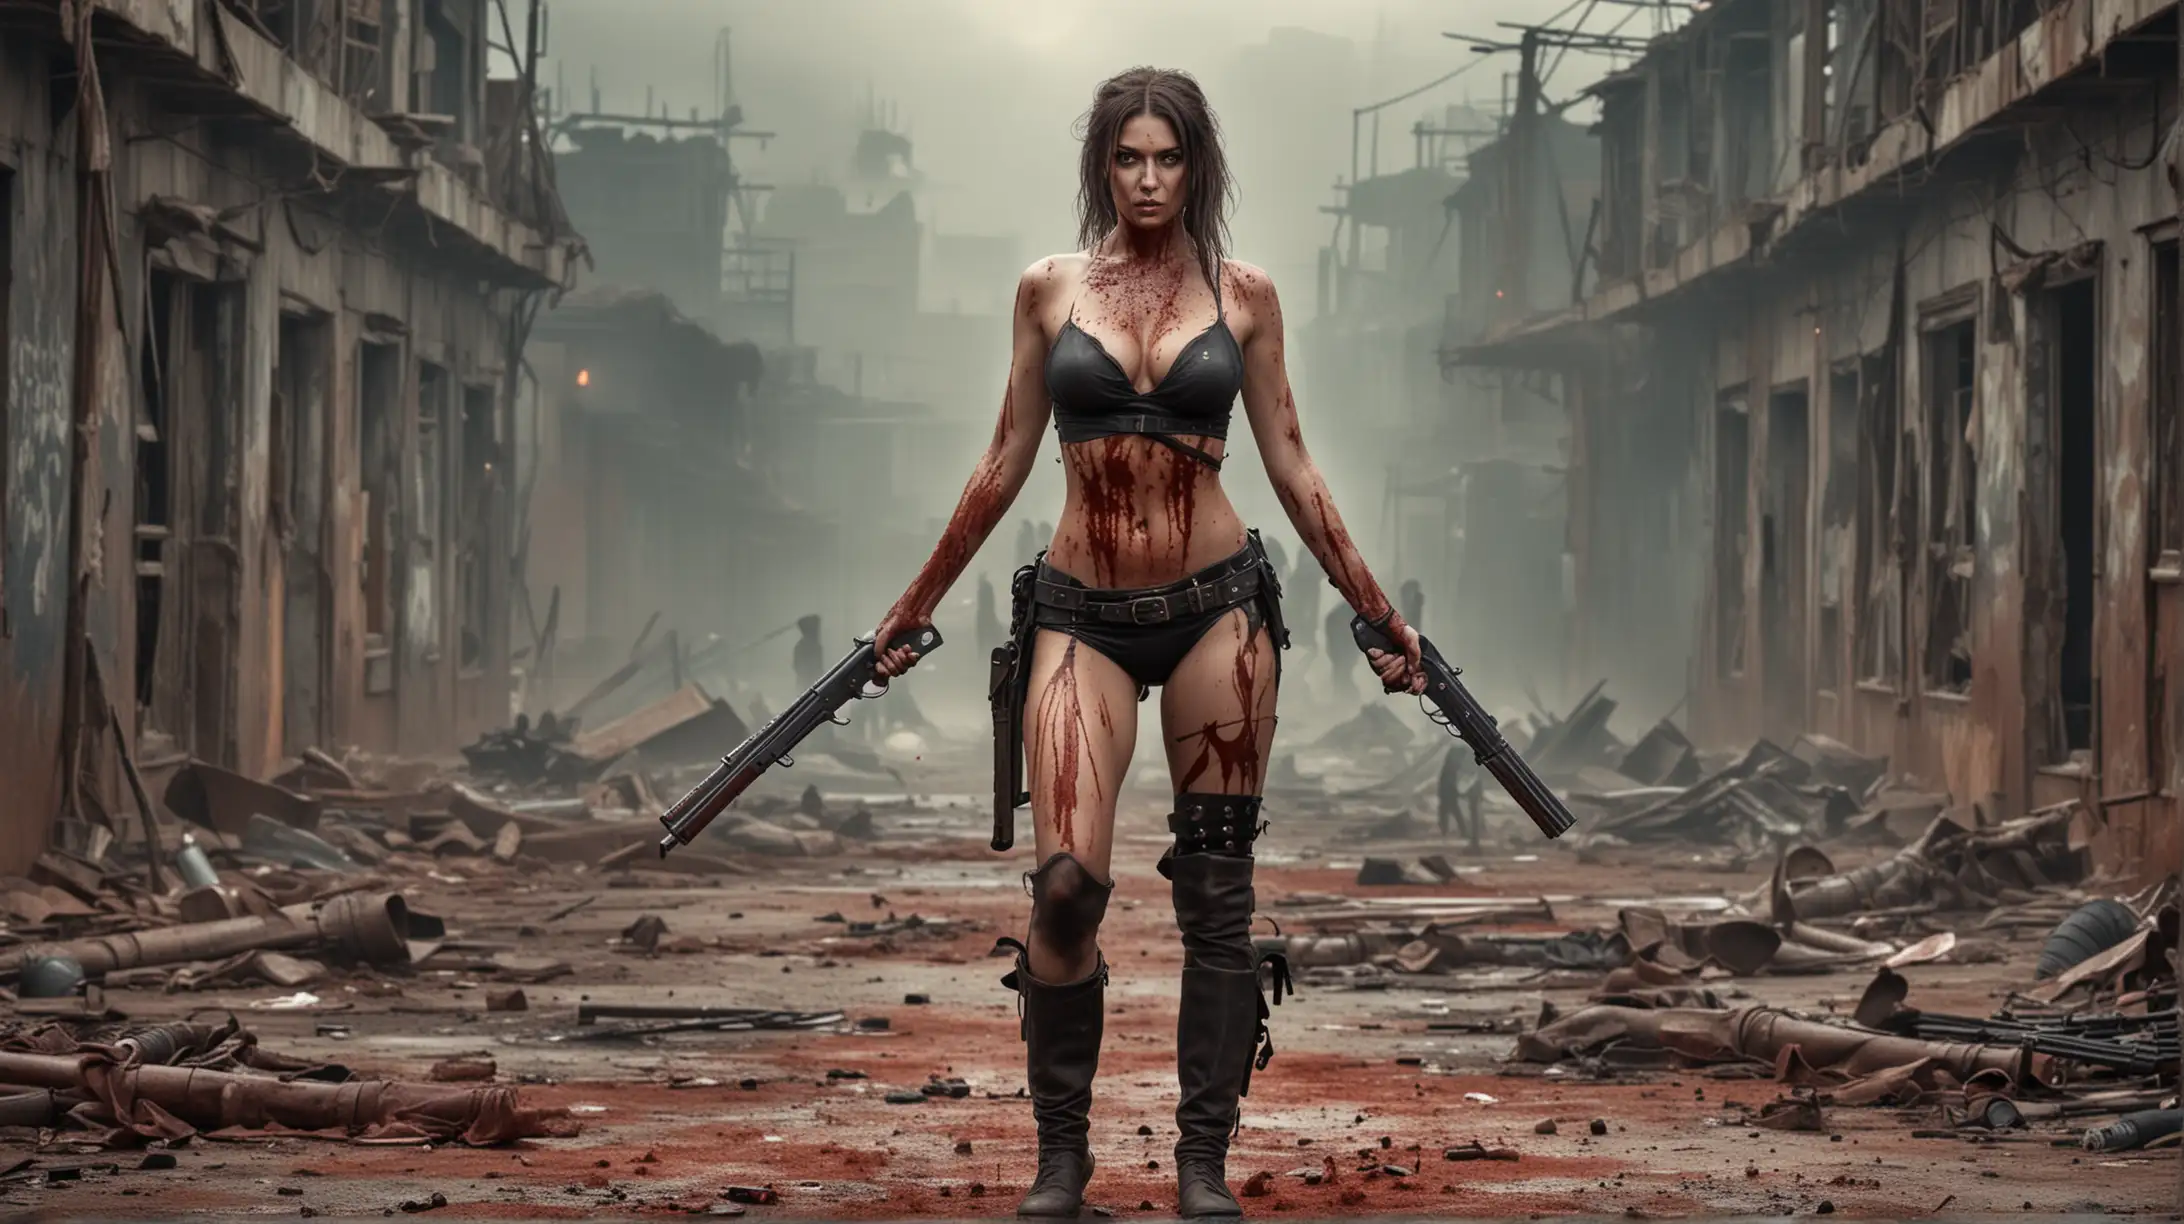 Strong Female Warrior in PostApocalyptic Combat